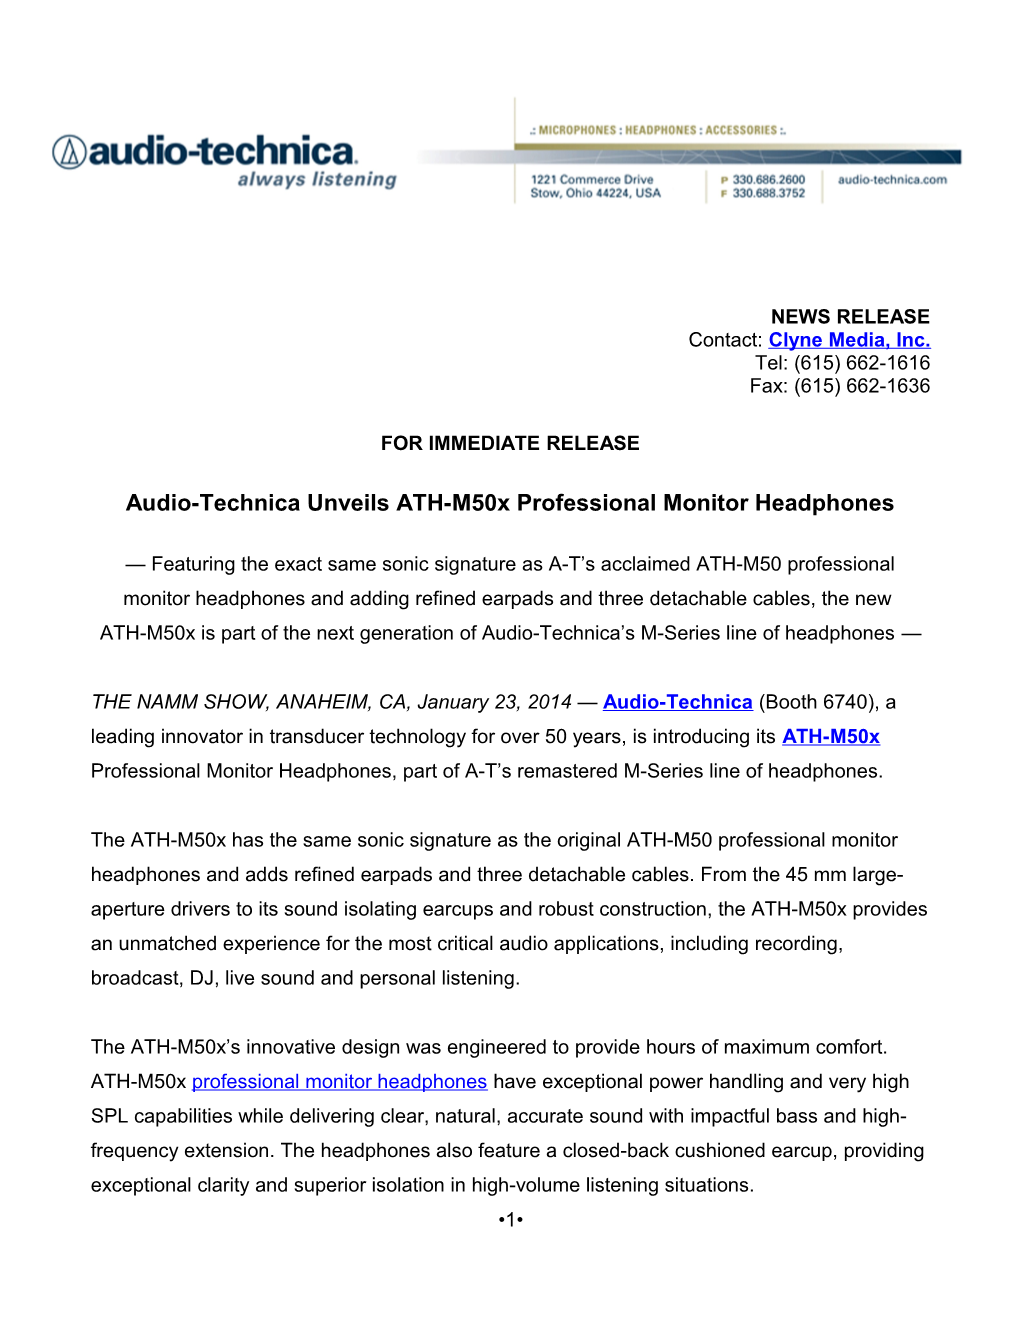 Audio-Technica Unveils ATH-M50x Professional Monitor Headphones